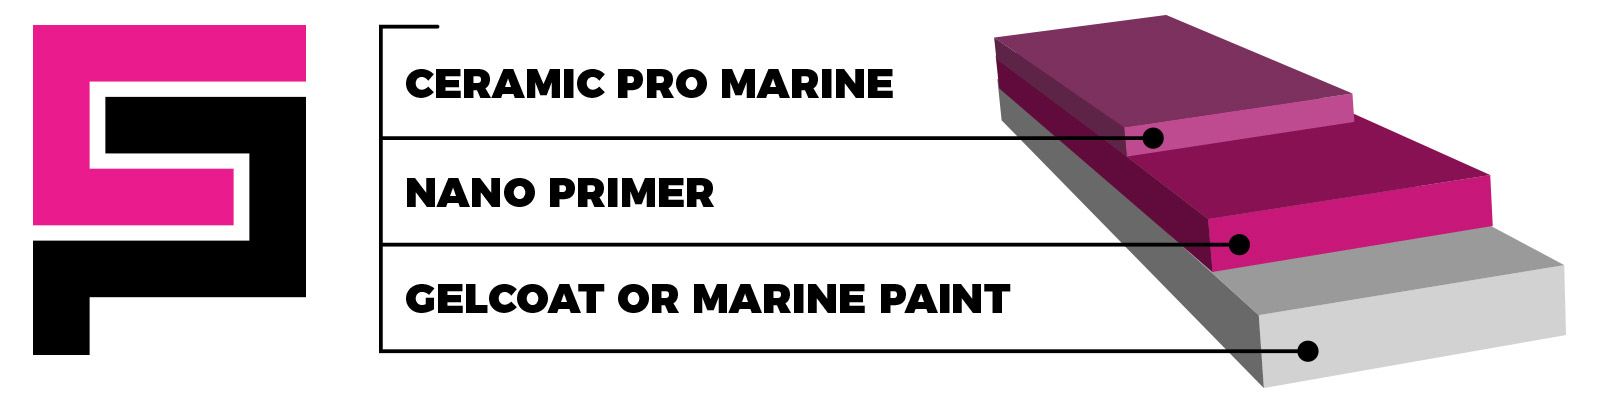 The Ceramic Pro Marine System